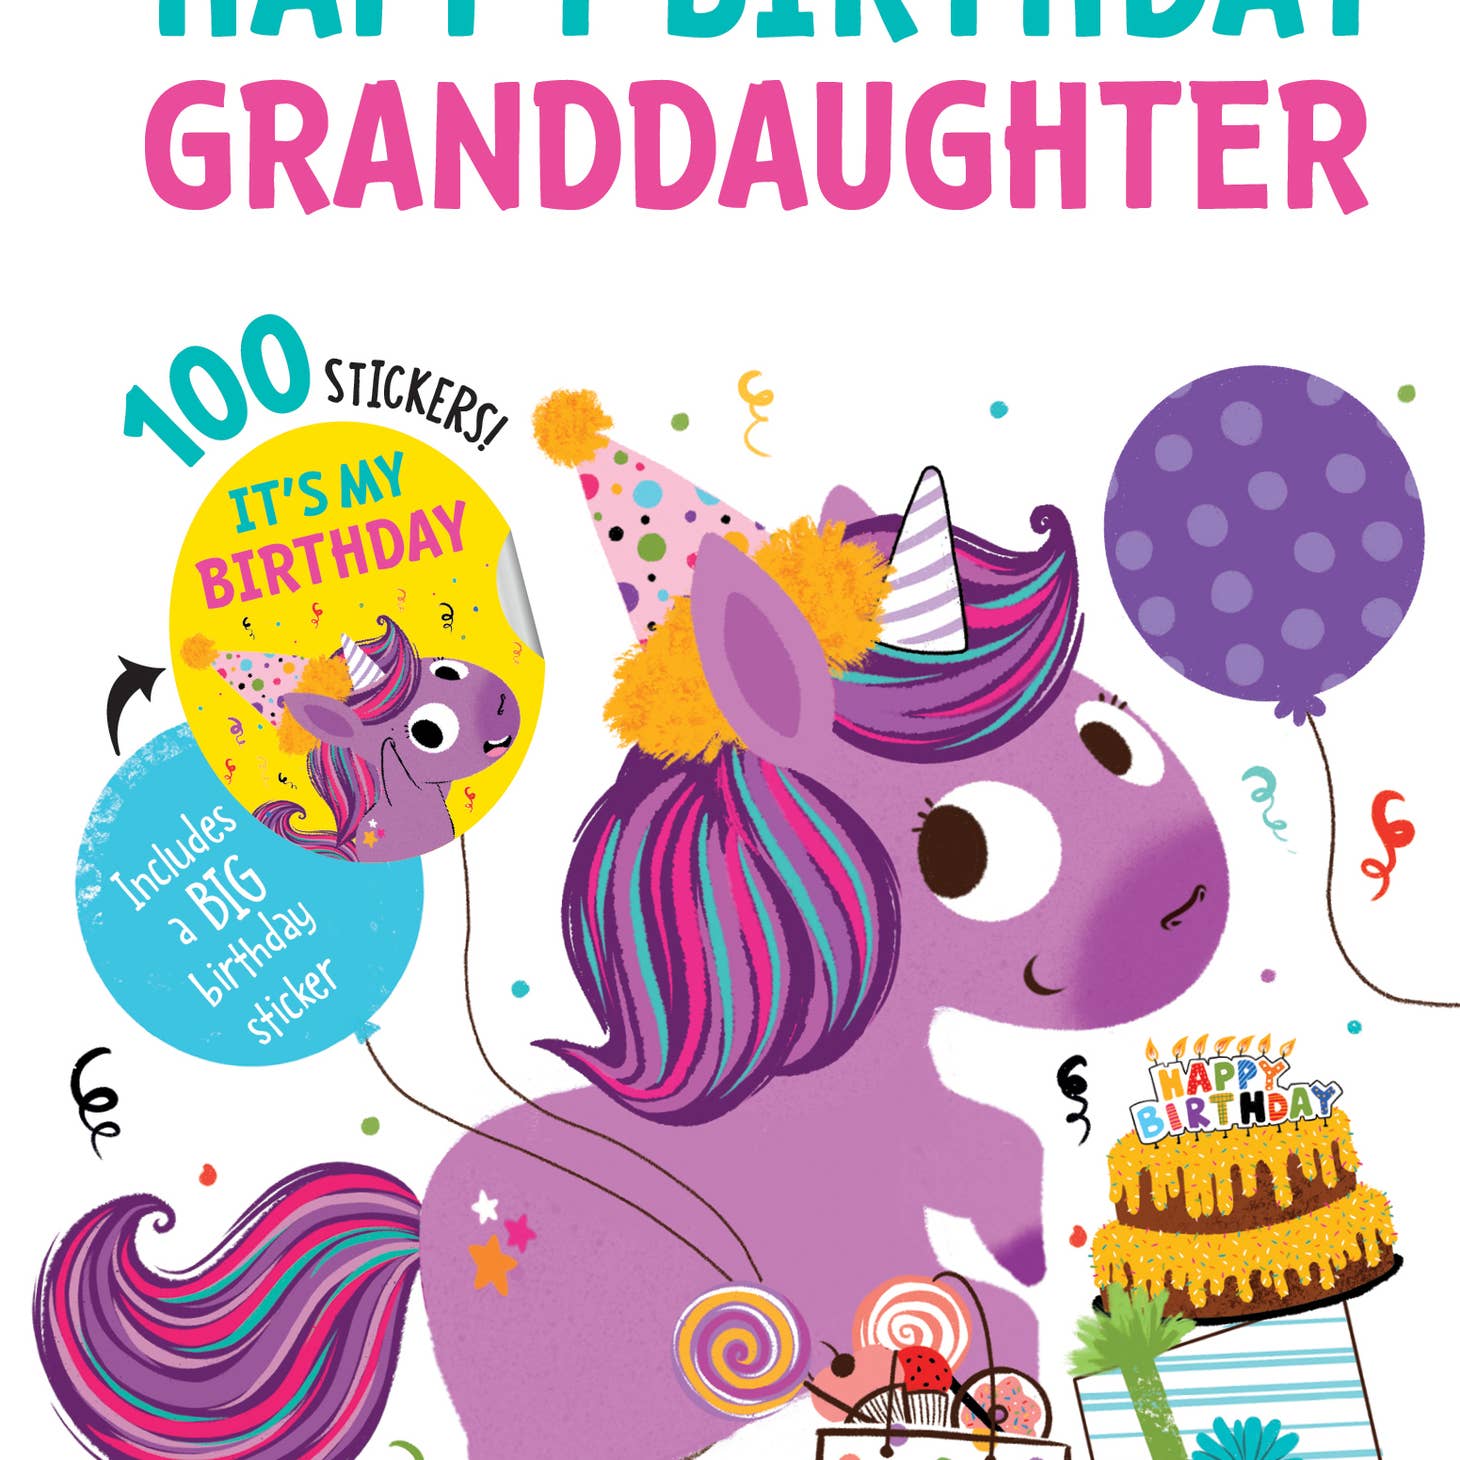 Happy Birthday Granddaughter Book